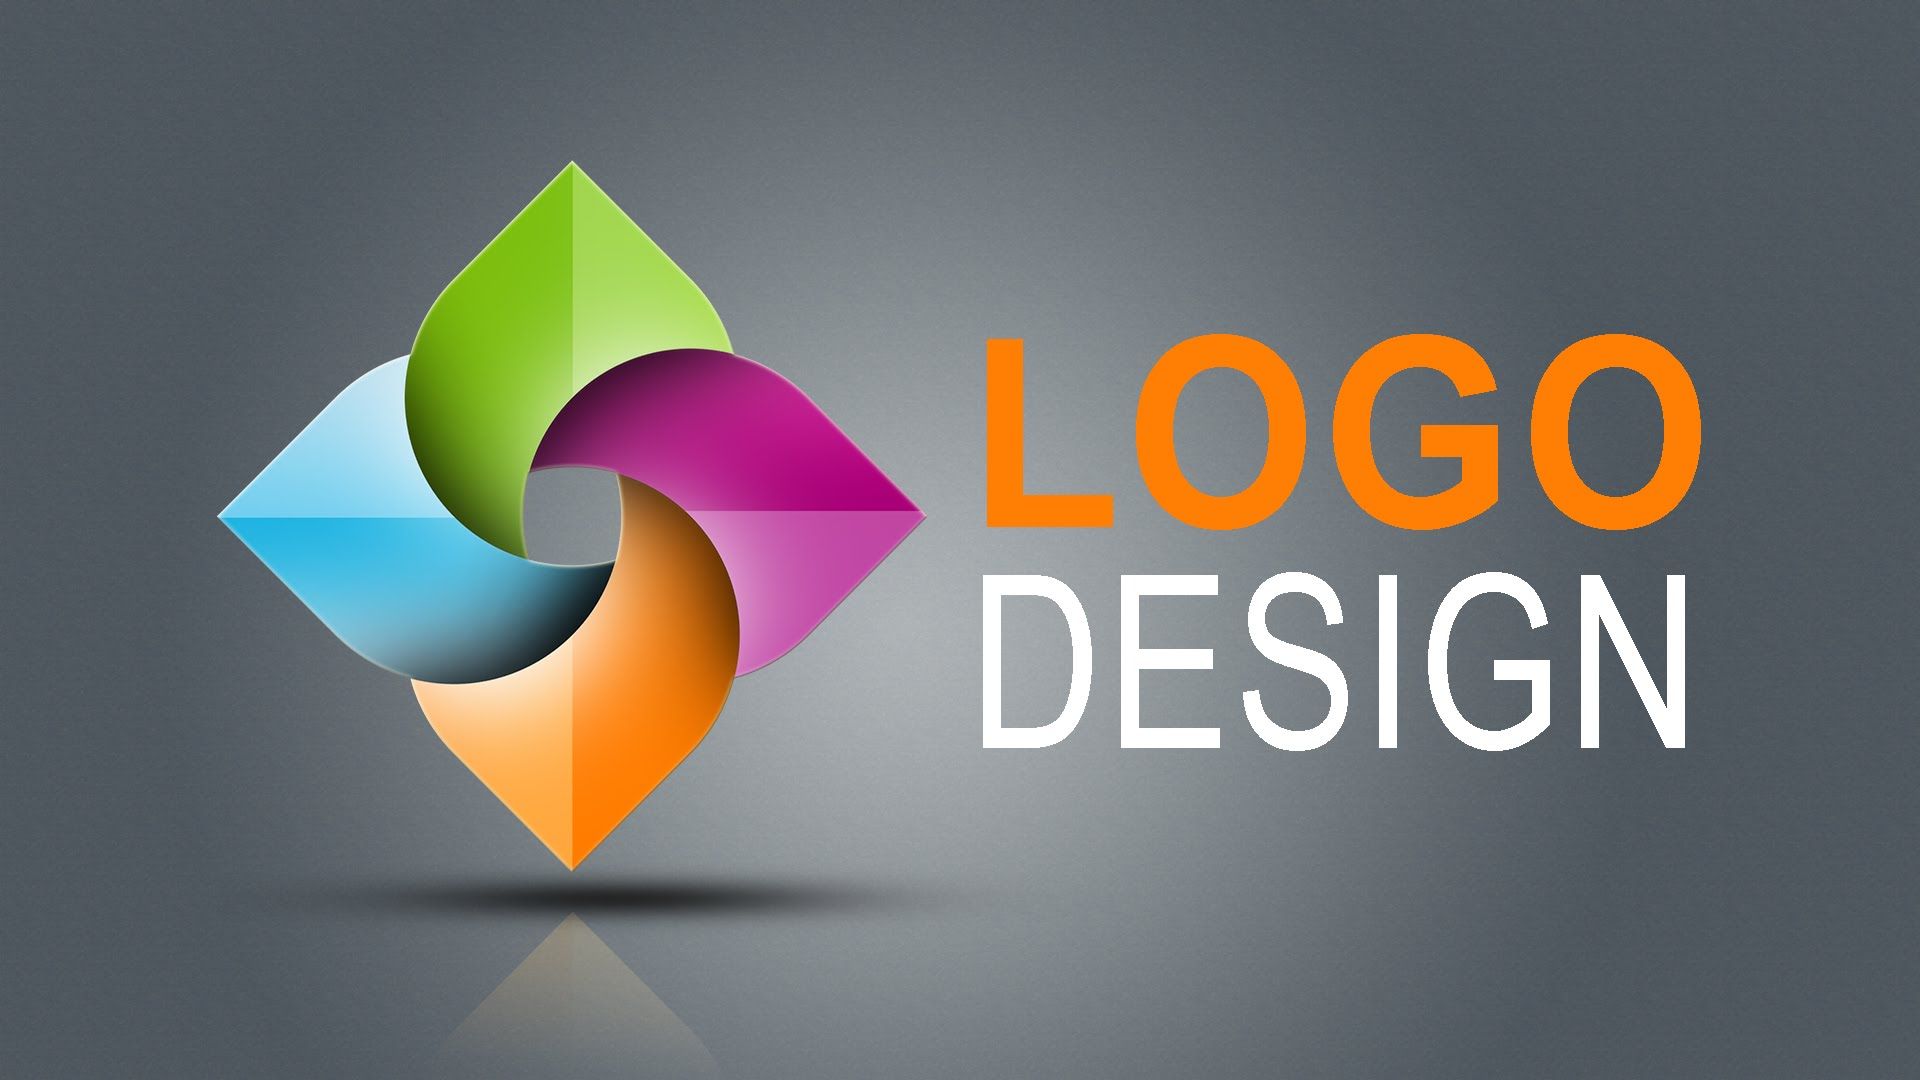 The Best Way to Make a Professional Business Logo Design Sense